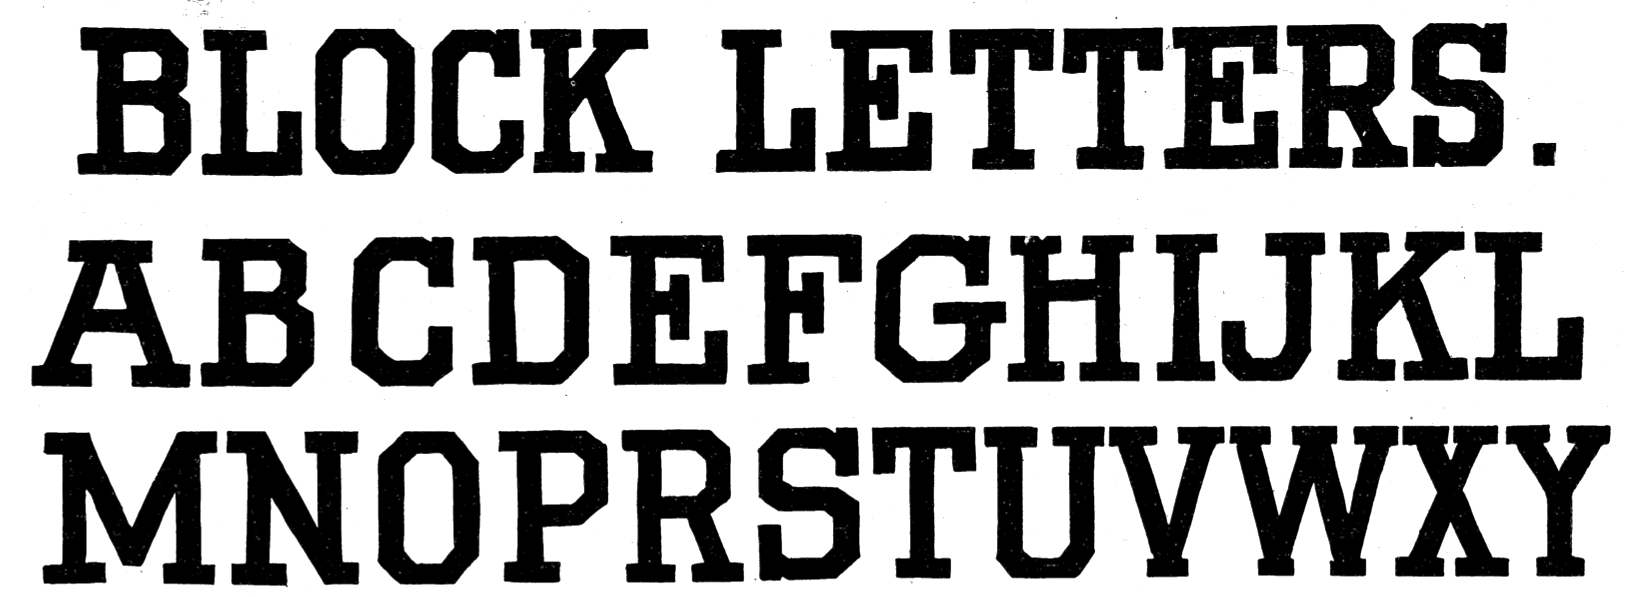 block lettering font